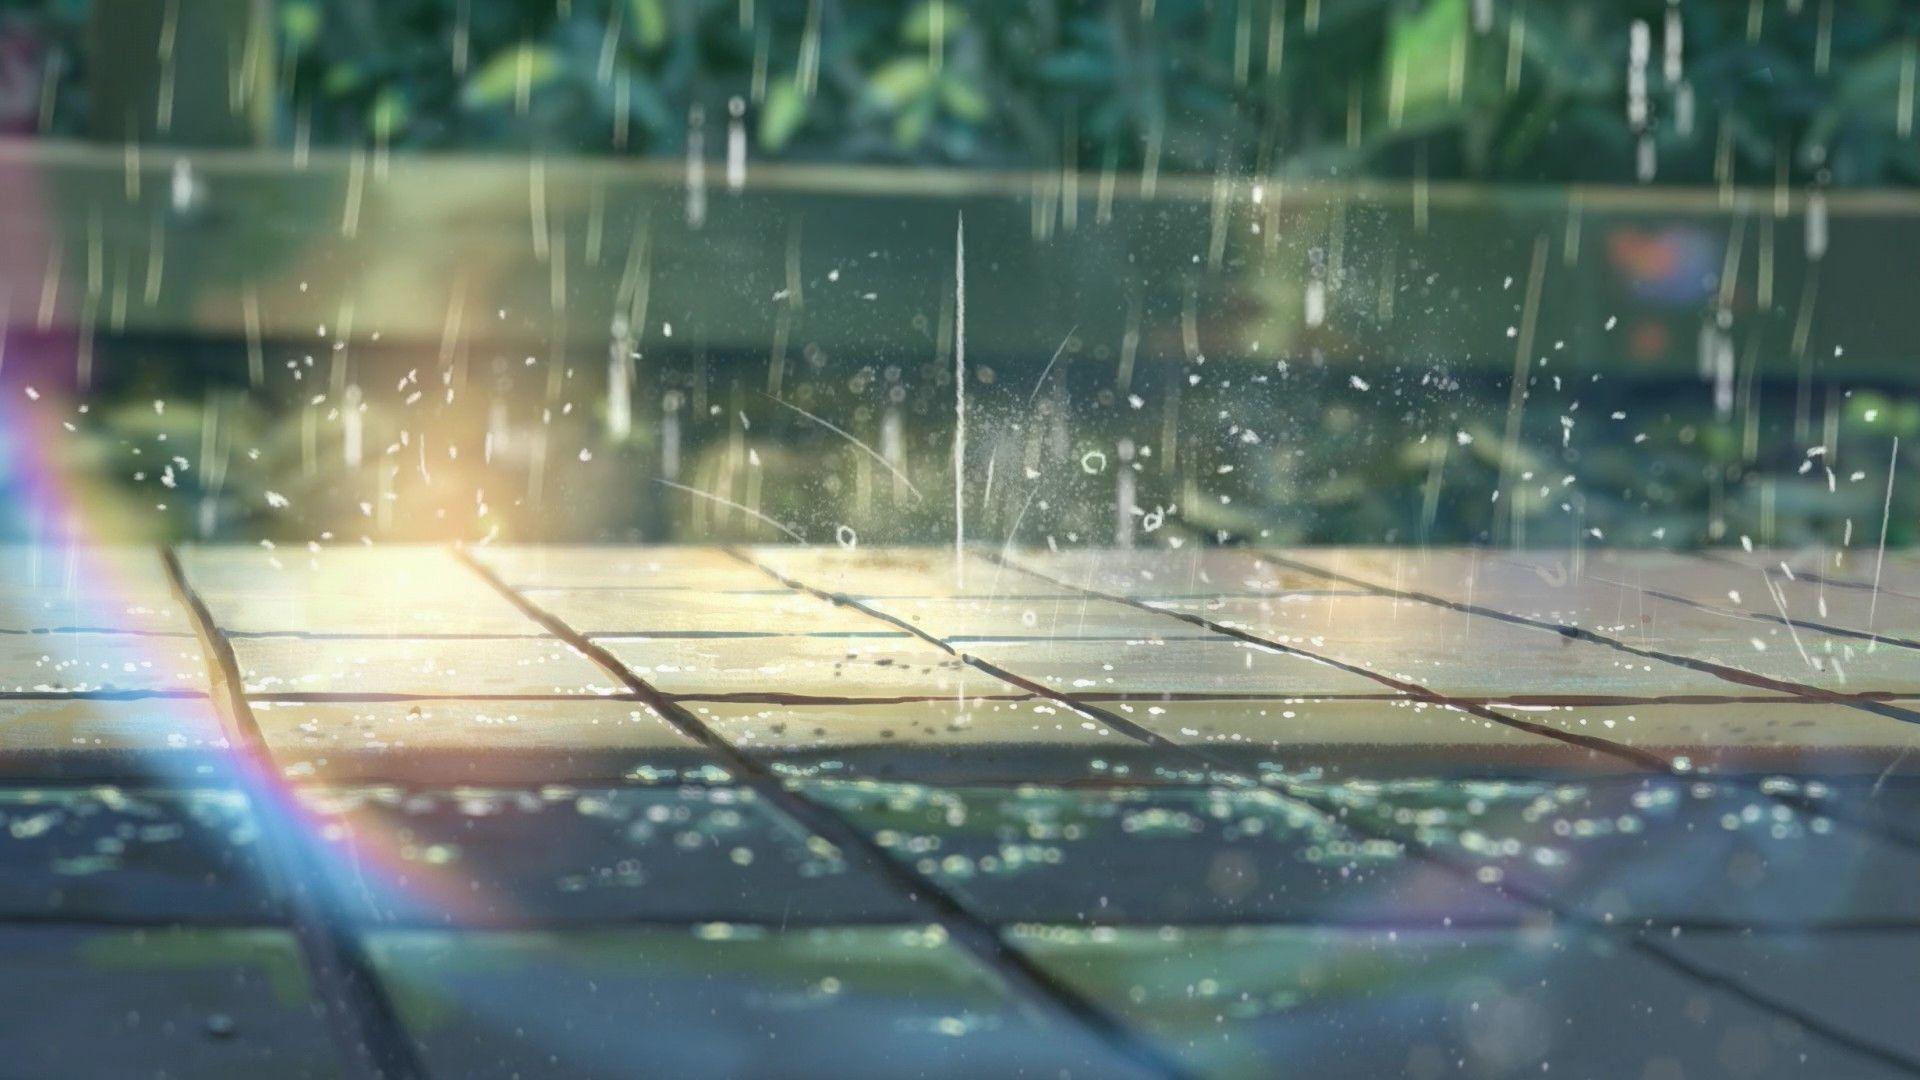 Makoto Shinkai HD Wallpaper Desktop Image and Photo